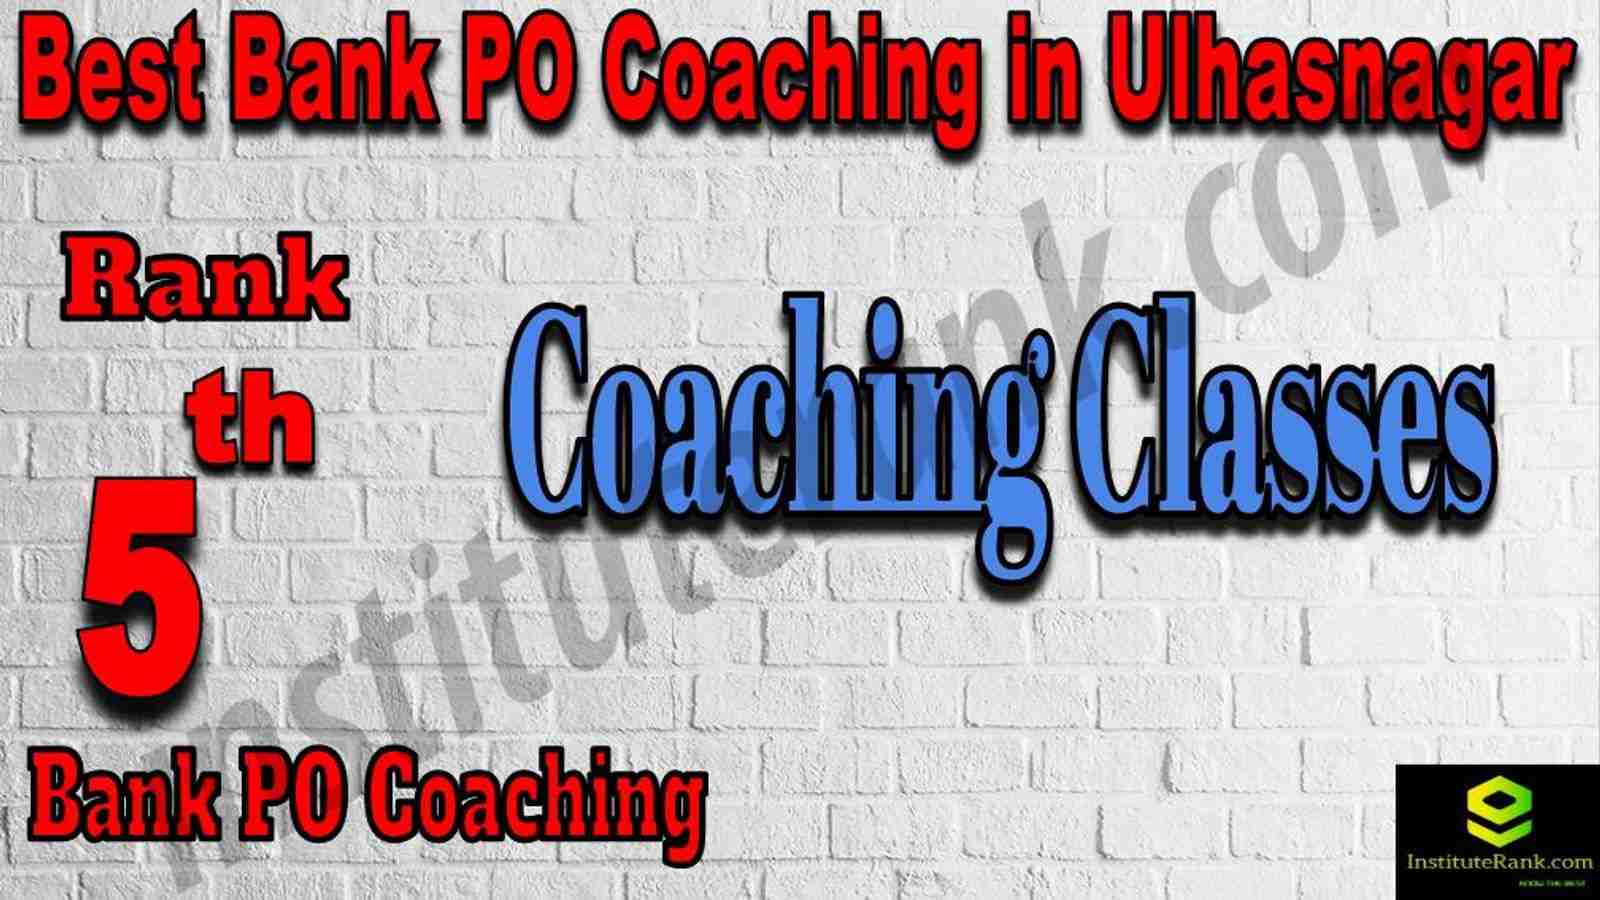 5th Best Bank PO Coaching in Ulhasnagar